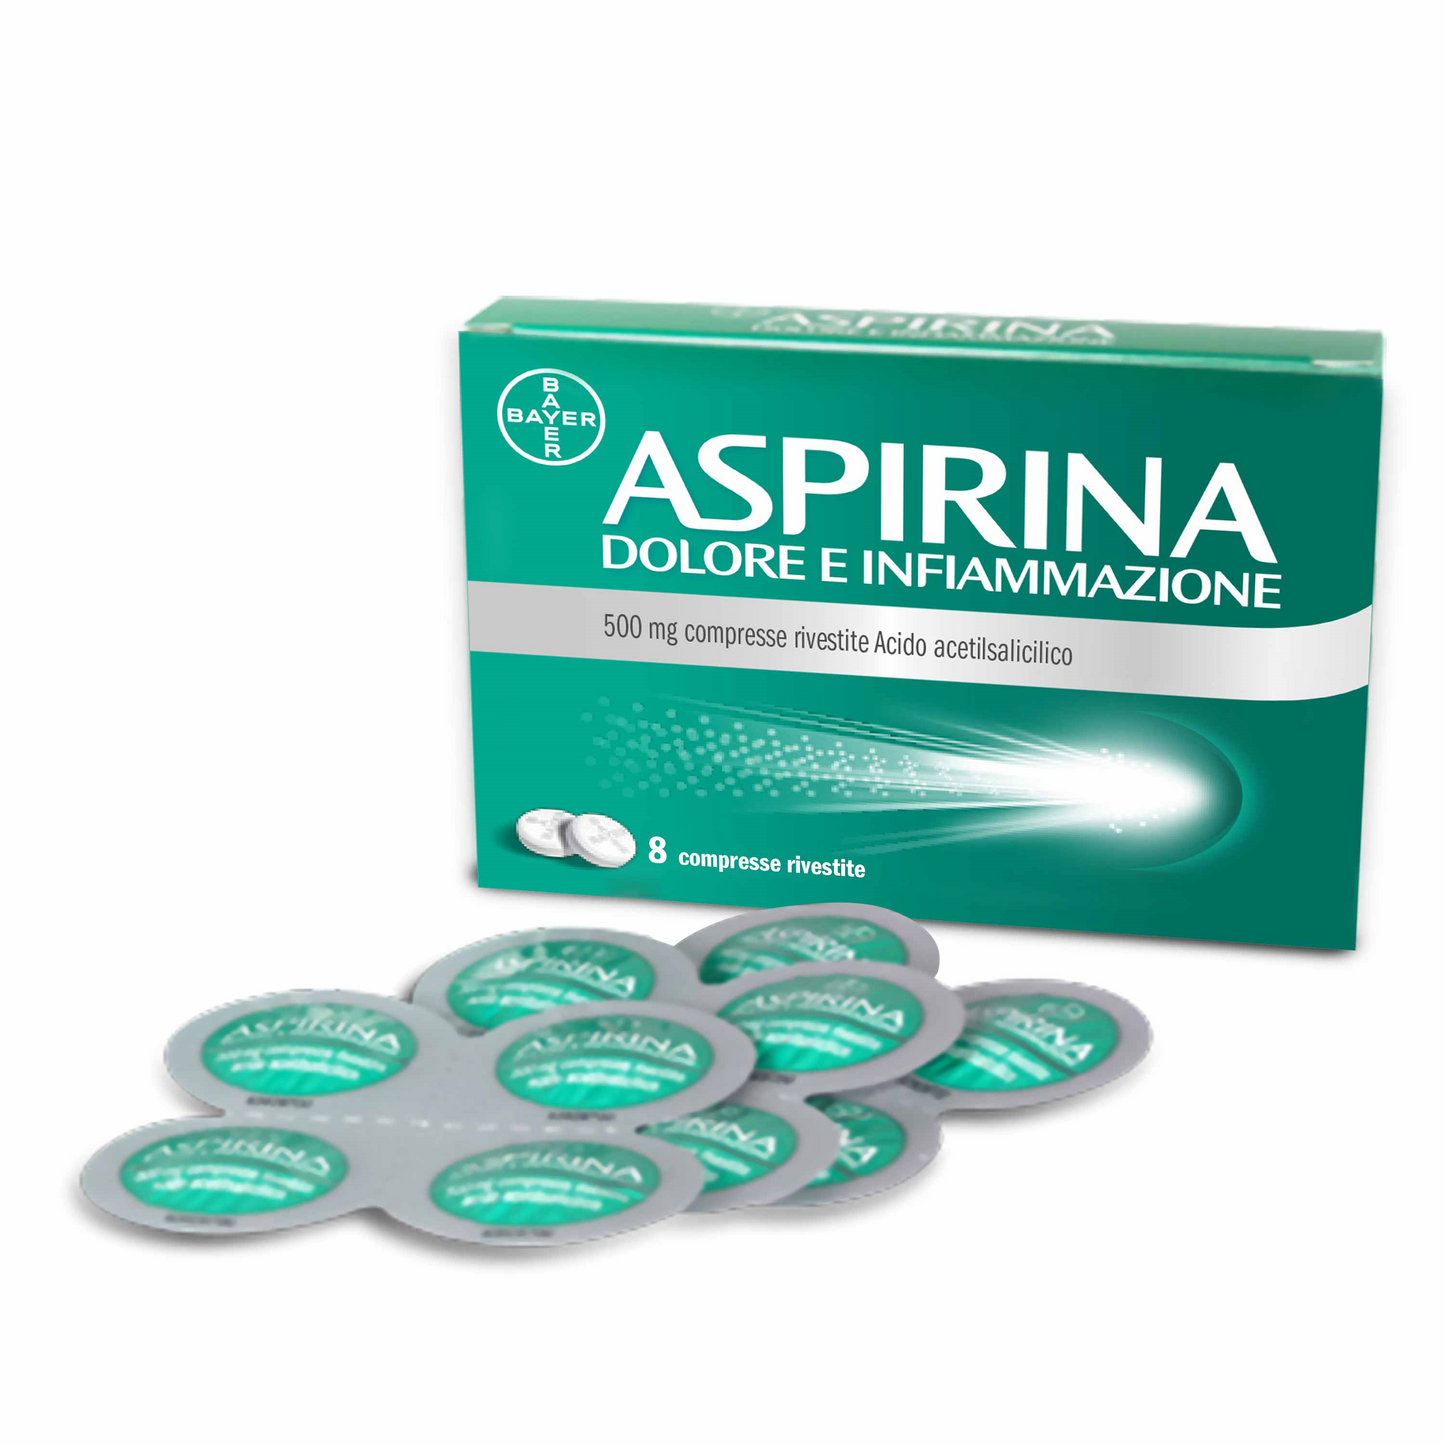 Aspirina Dolore E Infiammazione Per Dolori Muscolari Articolari 8 Compresse